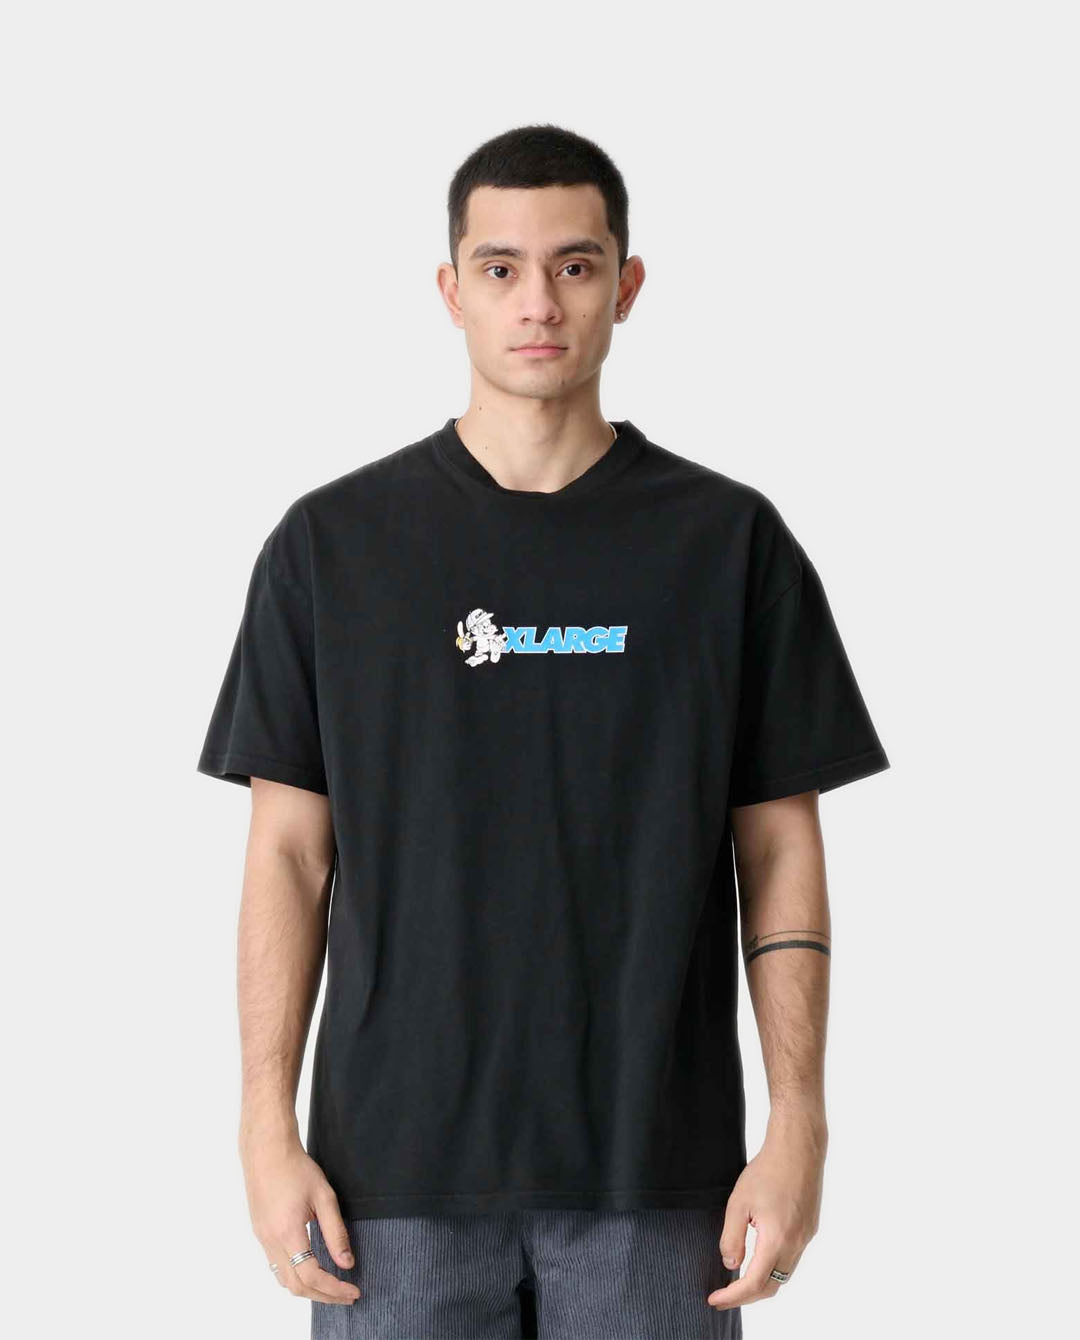 XLarge - Banana T-Shirt - Pigment Black